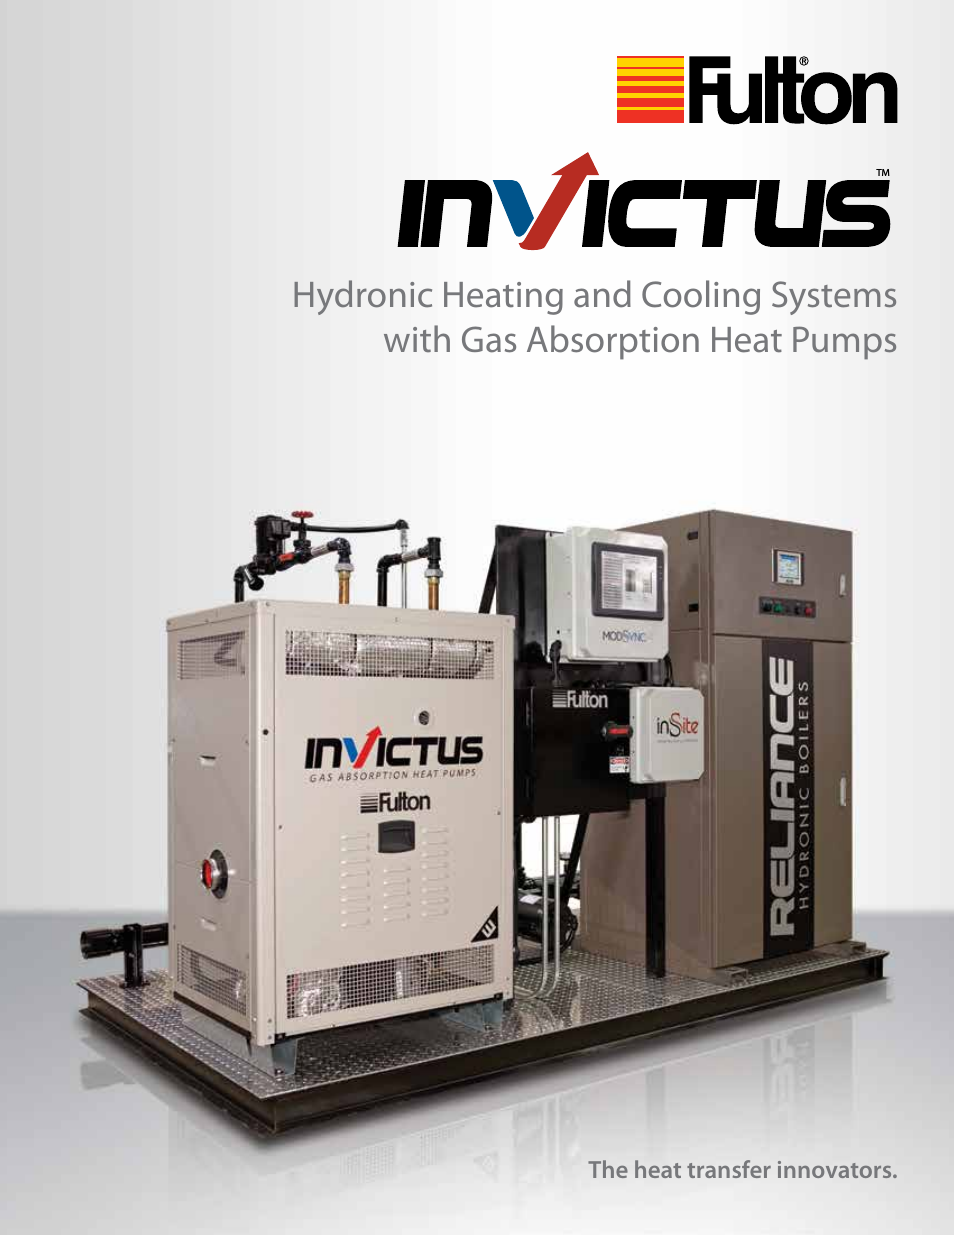 Invictus (IVS) Heat Pump Systems